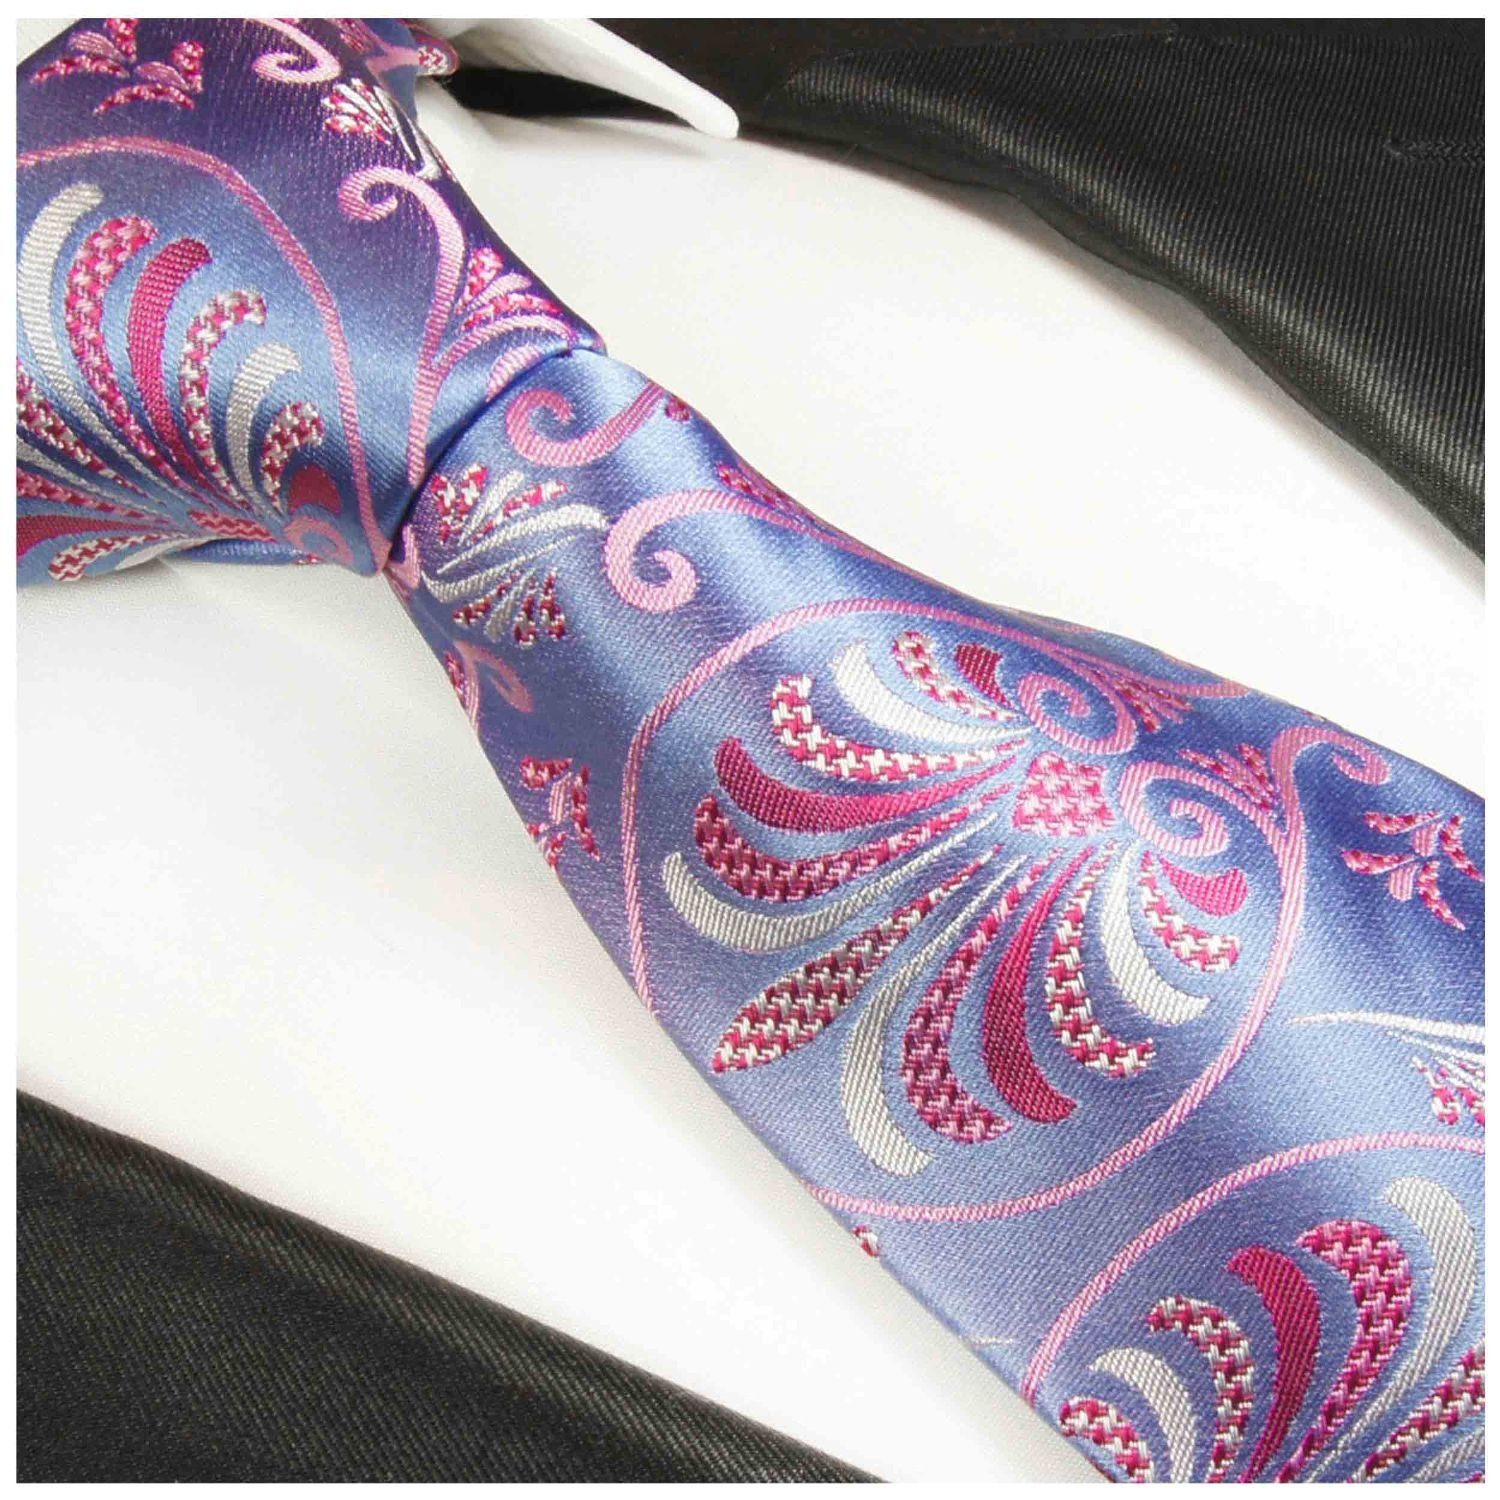 Schlips Seidenkrawatte modern Malone pink blau Seide floral Krawatte 1011 Paul 100% Elegante Schmal (6cm), Herren